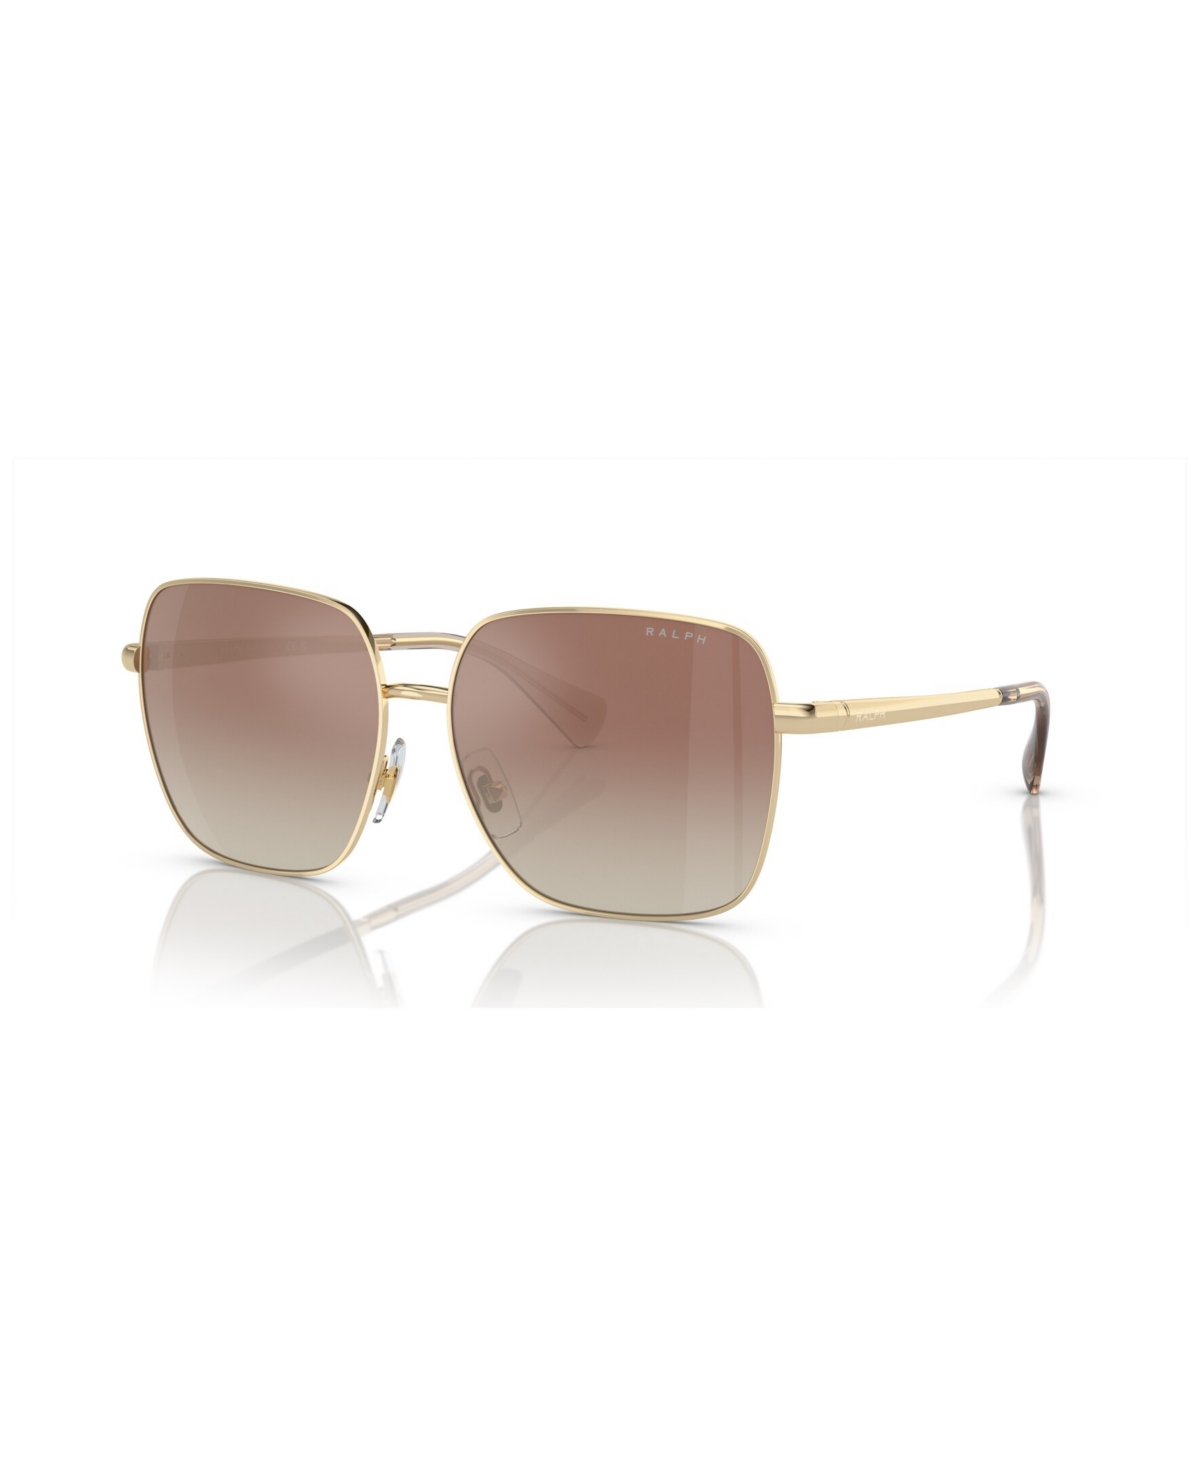 Women's Sunglasses, Mirror Gradient RA4142 - Shiny Pale Gold